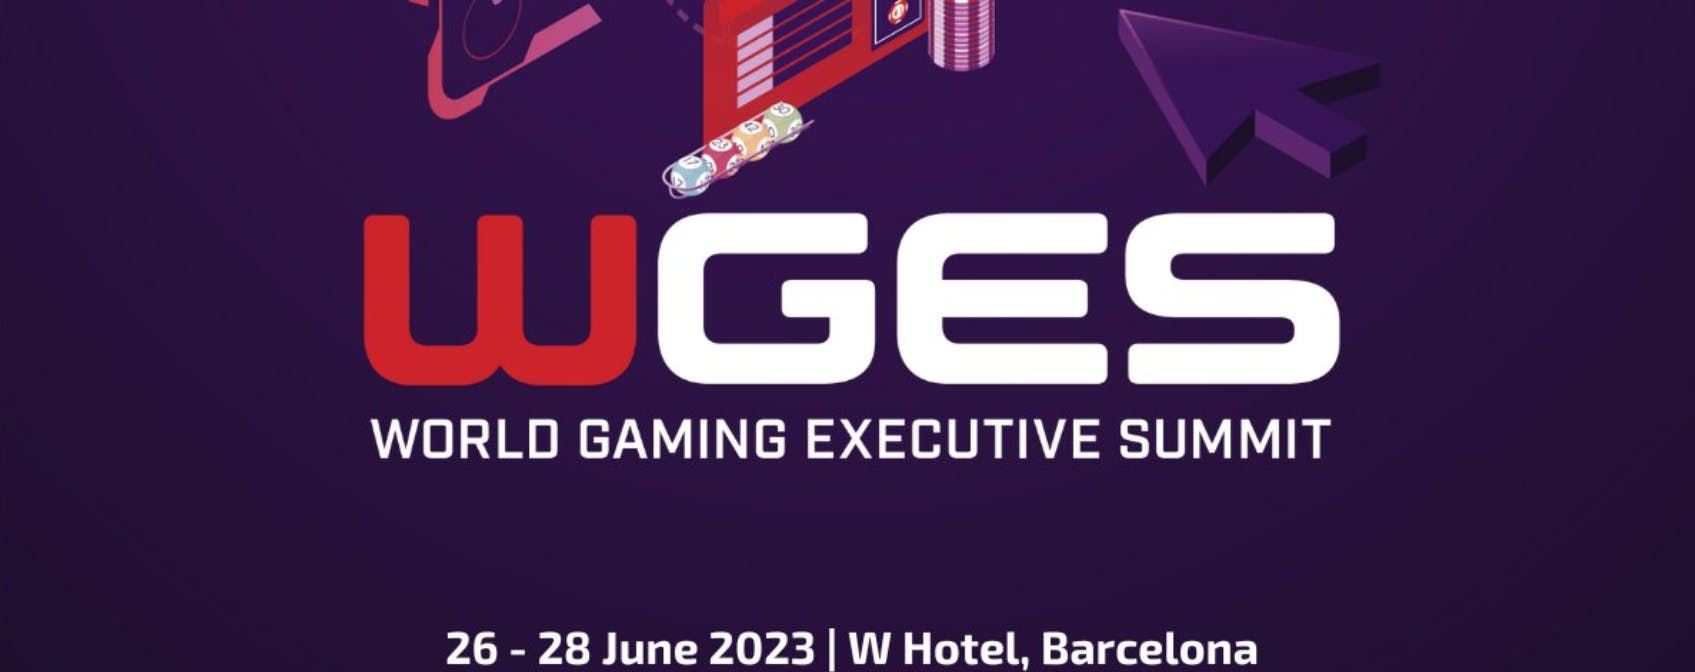 World Gaming Executive Summit 2023